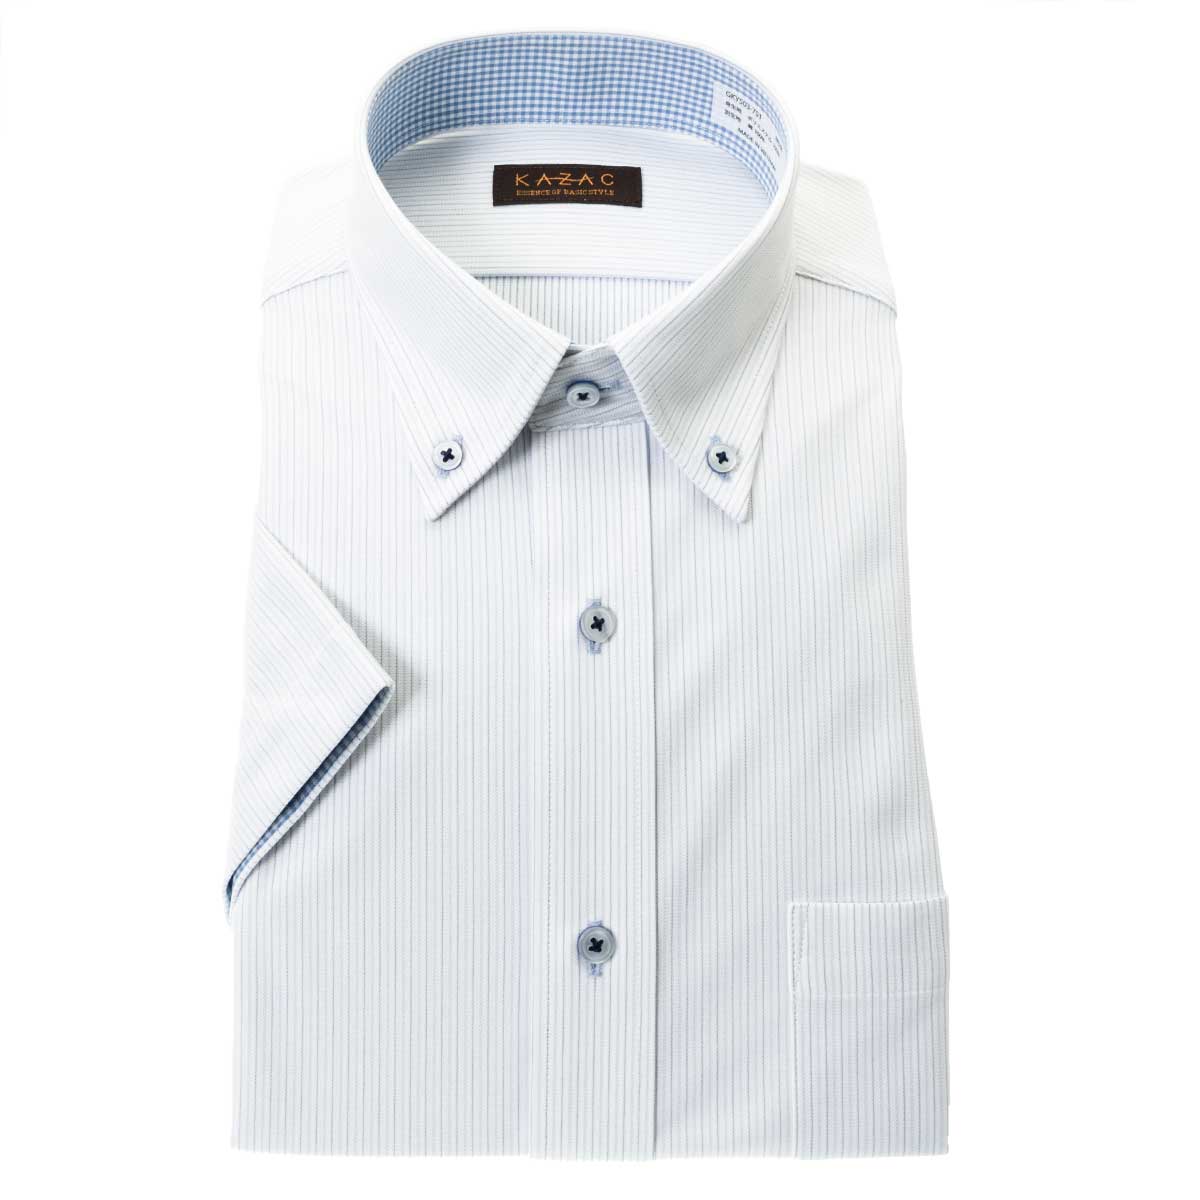 KAZAC 半袖 ニットシャツ(裄詰不可)ボタンダウン ブルー ワイシャツ